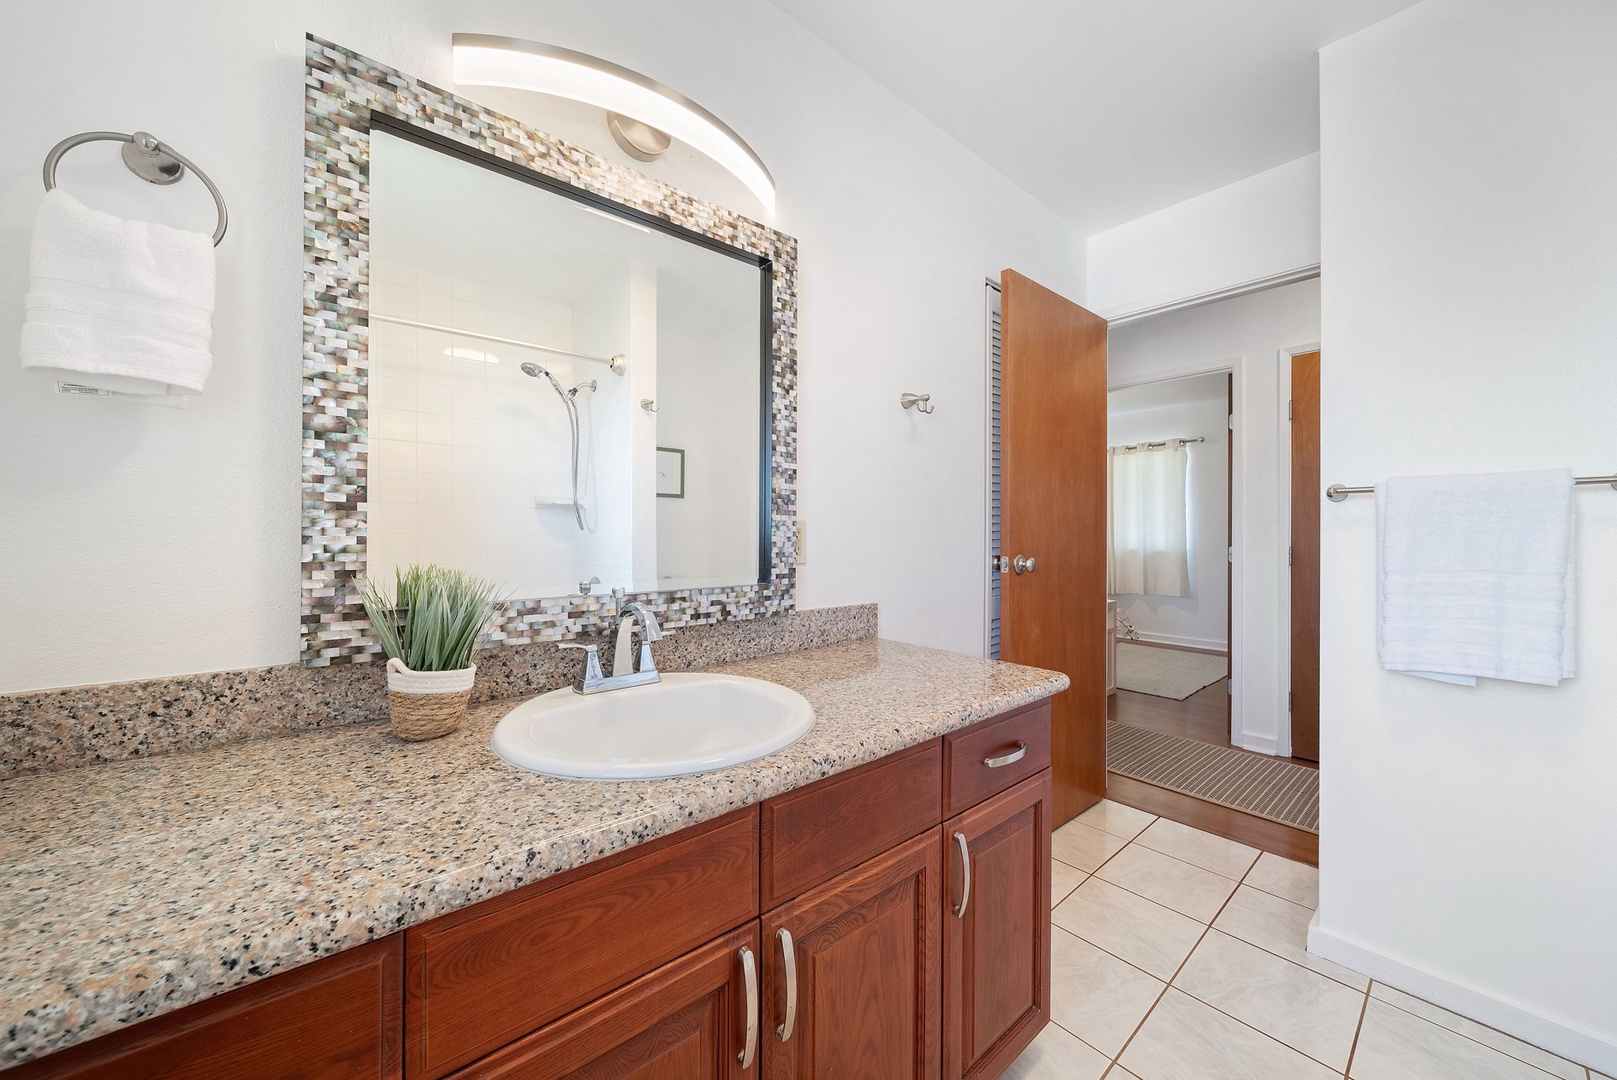 Haleiwa Vacation Rentals, Pikai Hale - The full guest bathroom has a single vanity/sink and plenty of storage